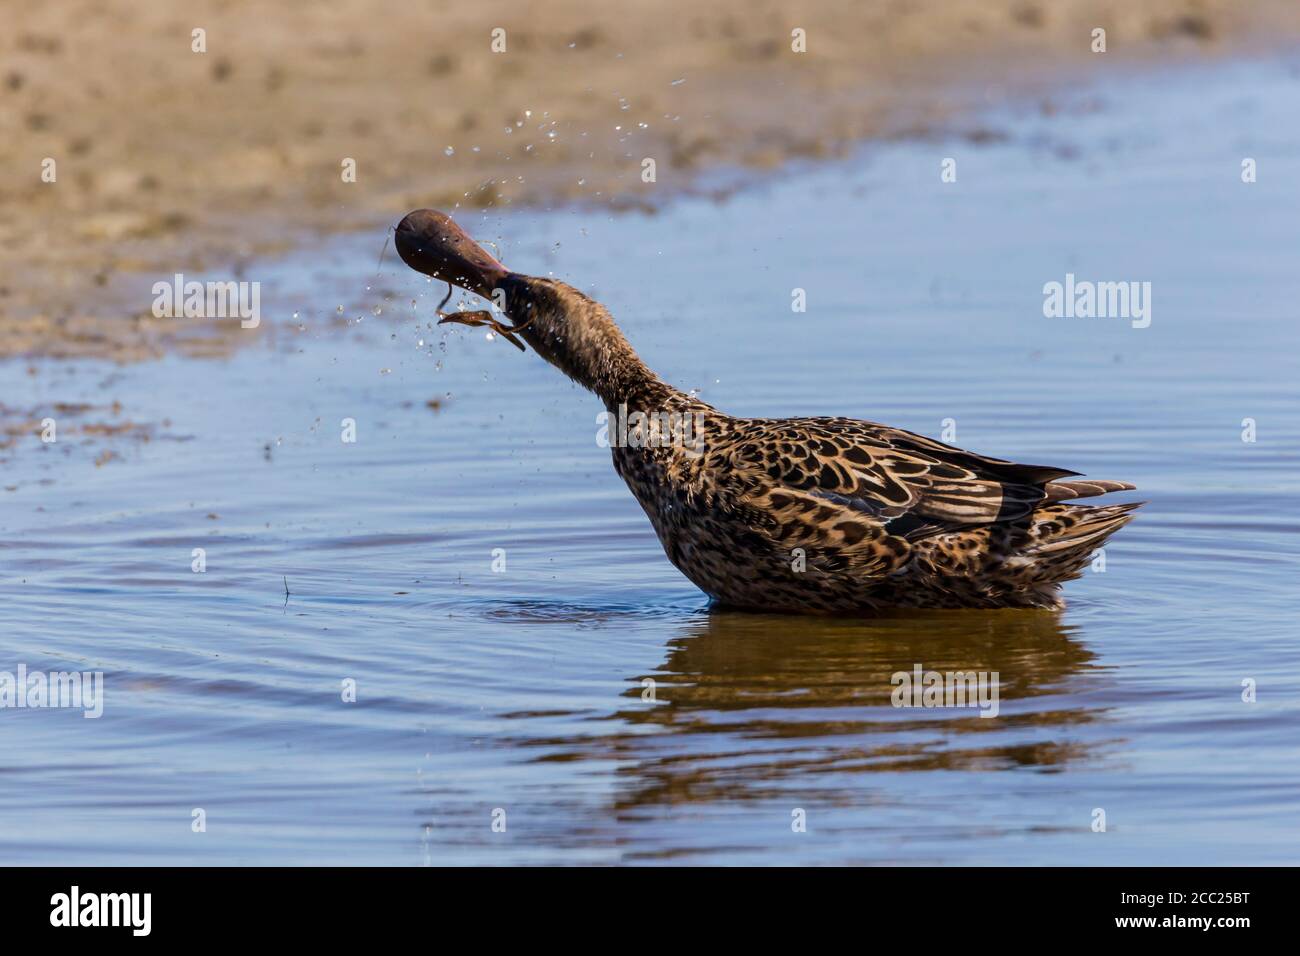 Germany, Schleswig Holstein, Shoveler bird swimming in water Stock Photo